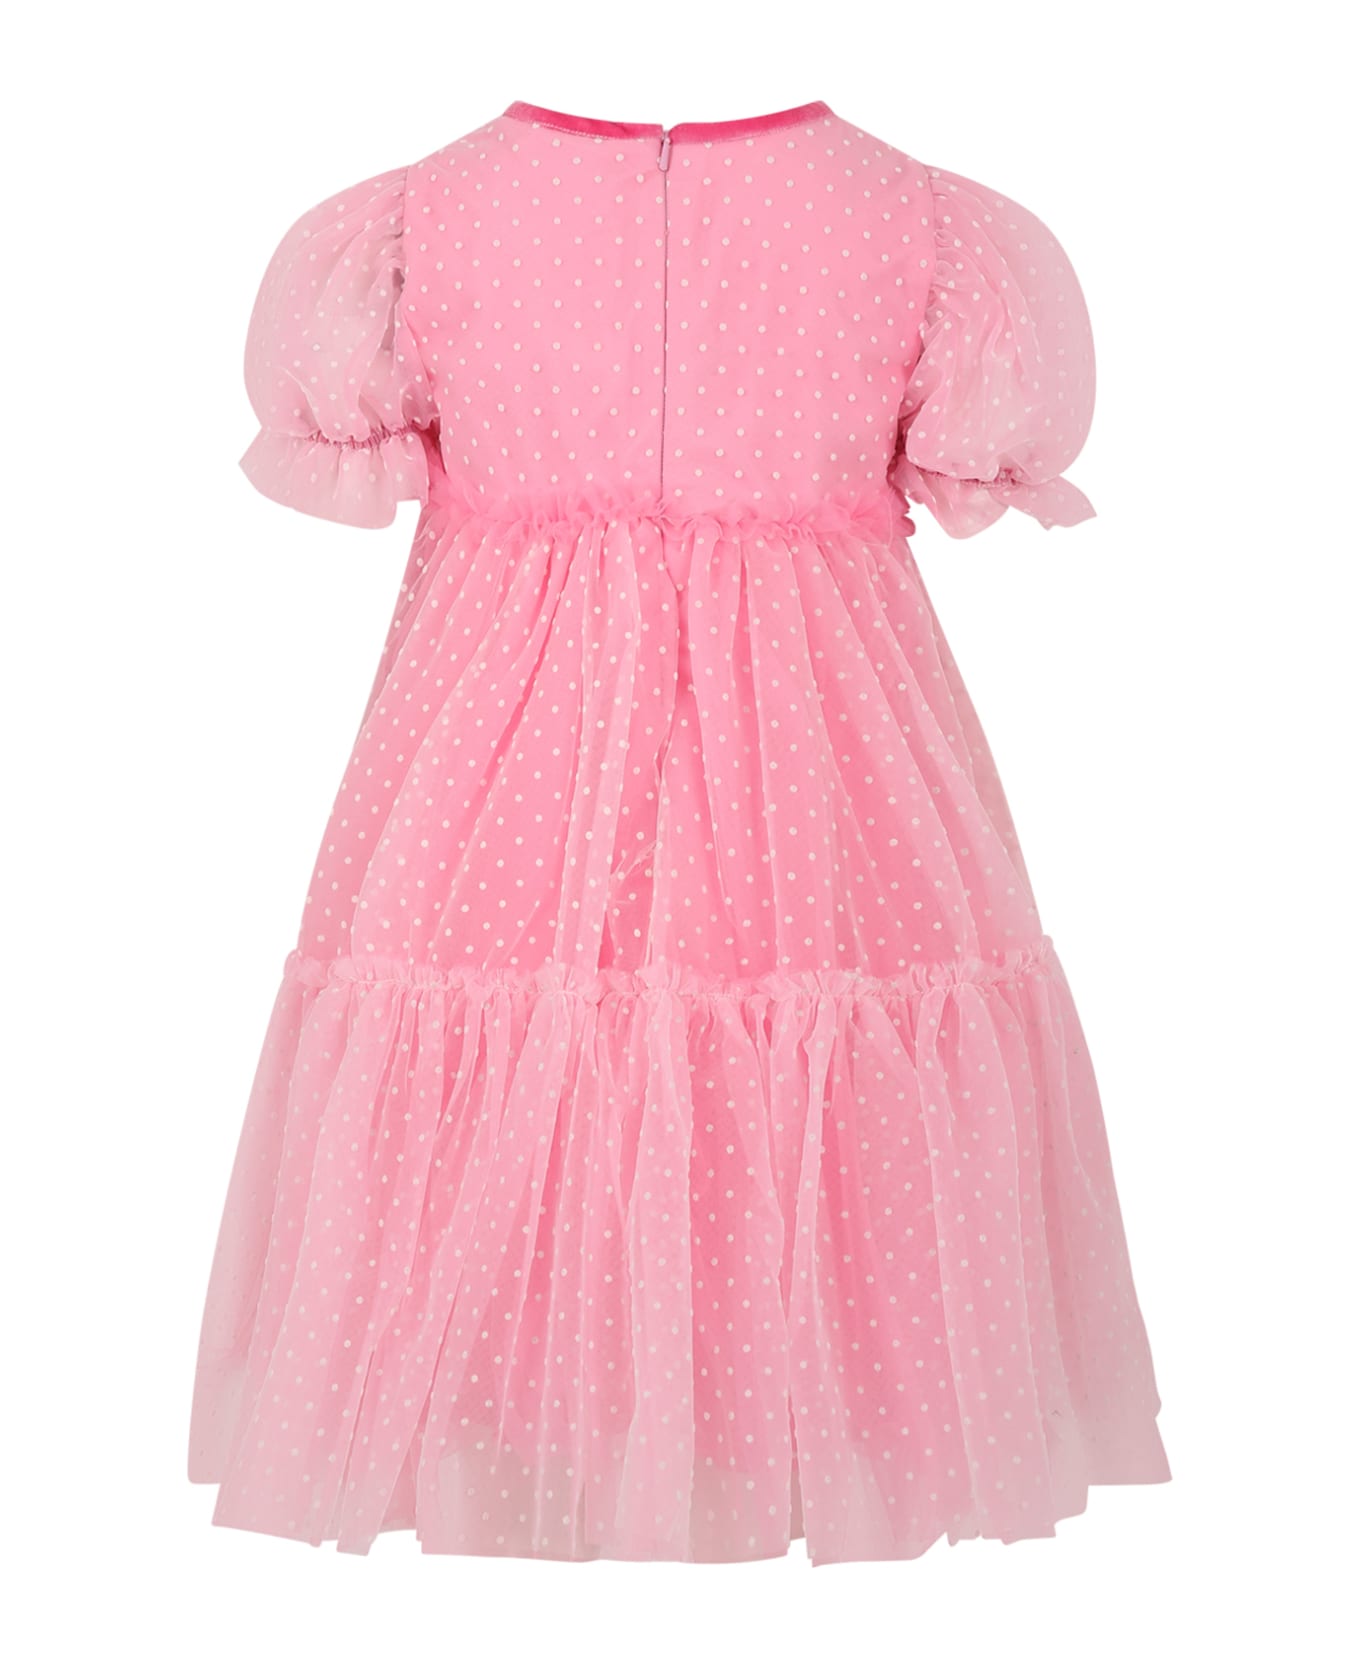 Monnalisa Pink Dress For Girl With Polka Dots - Pink